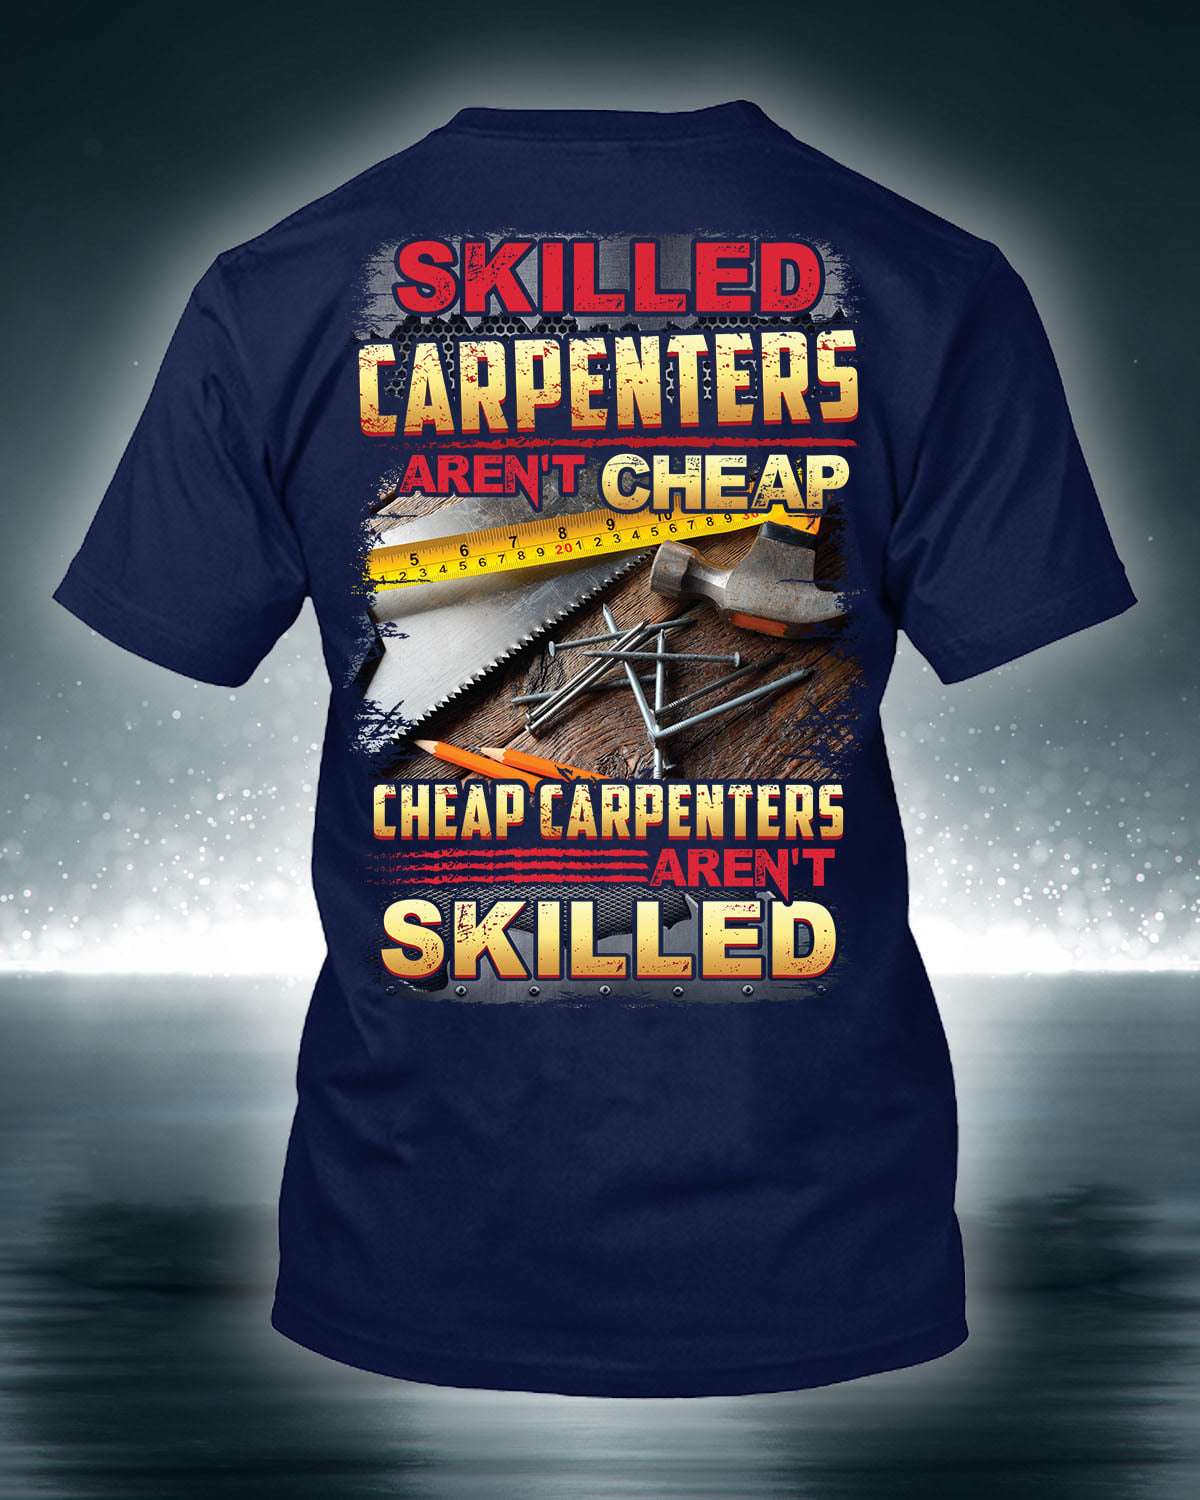 Skilled carpenters aren't cheap cheap carpenters aren't skilled - Carpenter the job